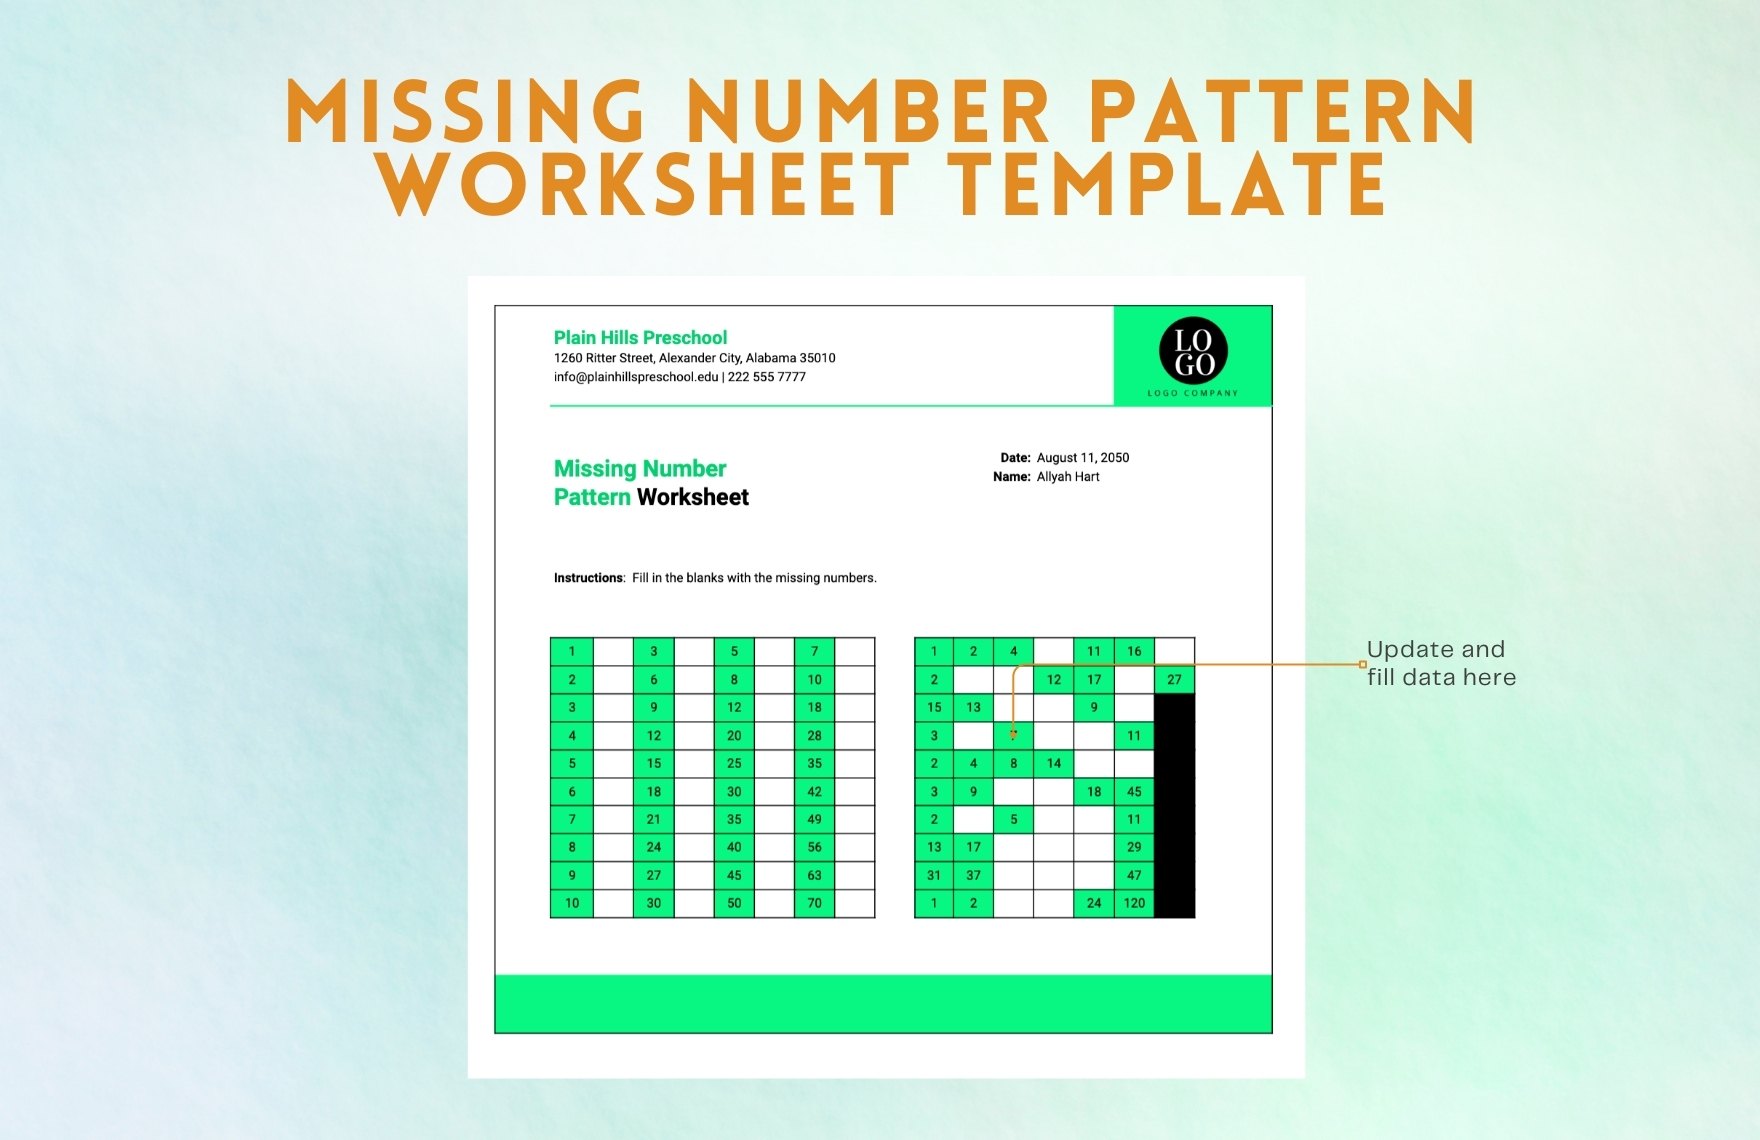 Missing Number Pattern Worksheet Template